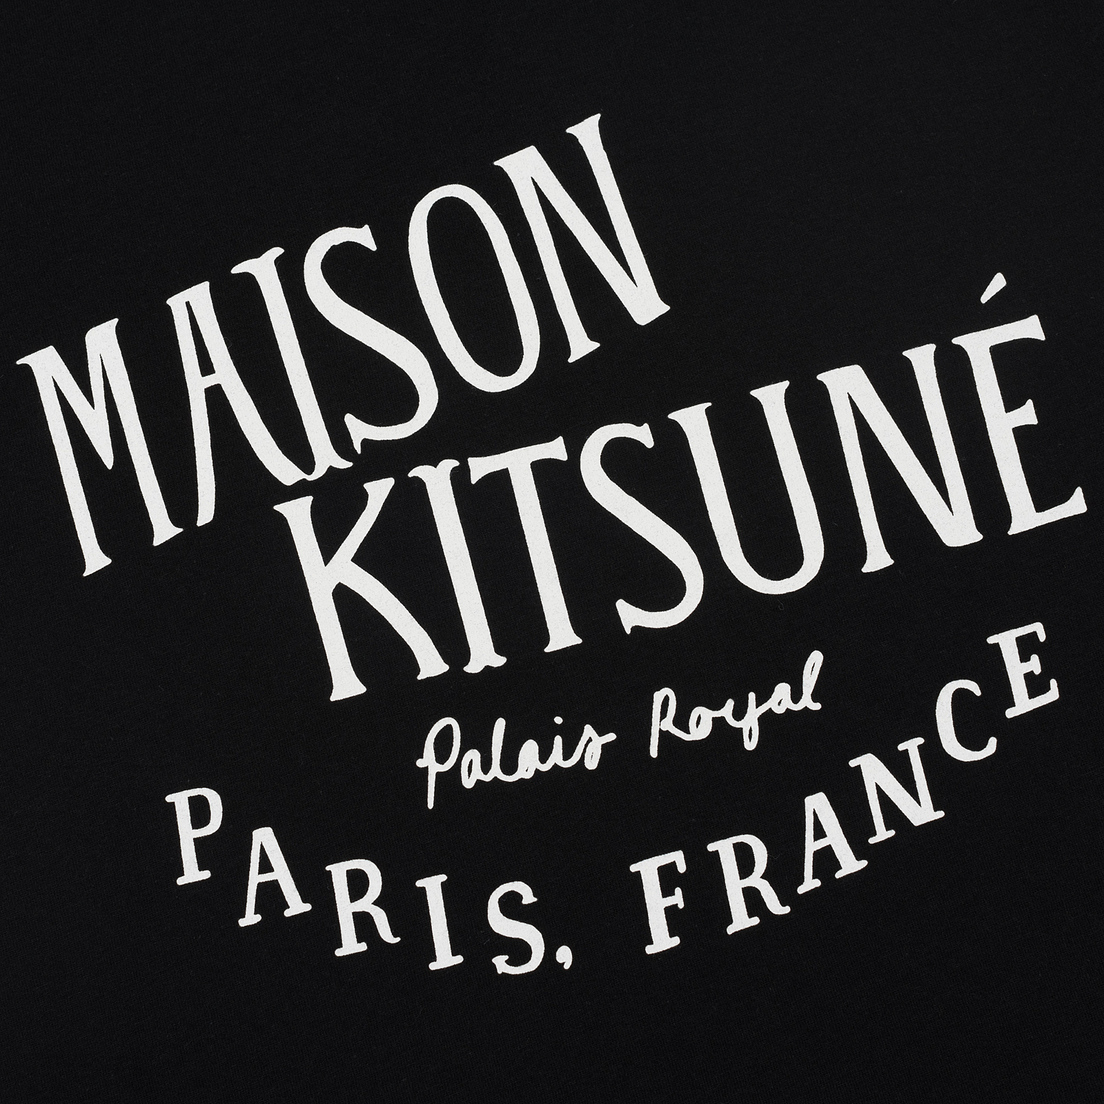 Maison Kitsune Женская футболка Palais Royal